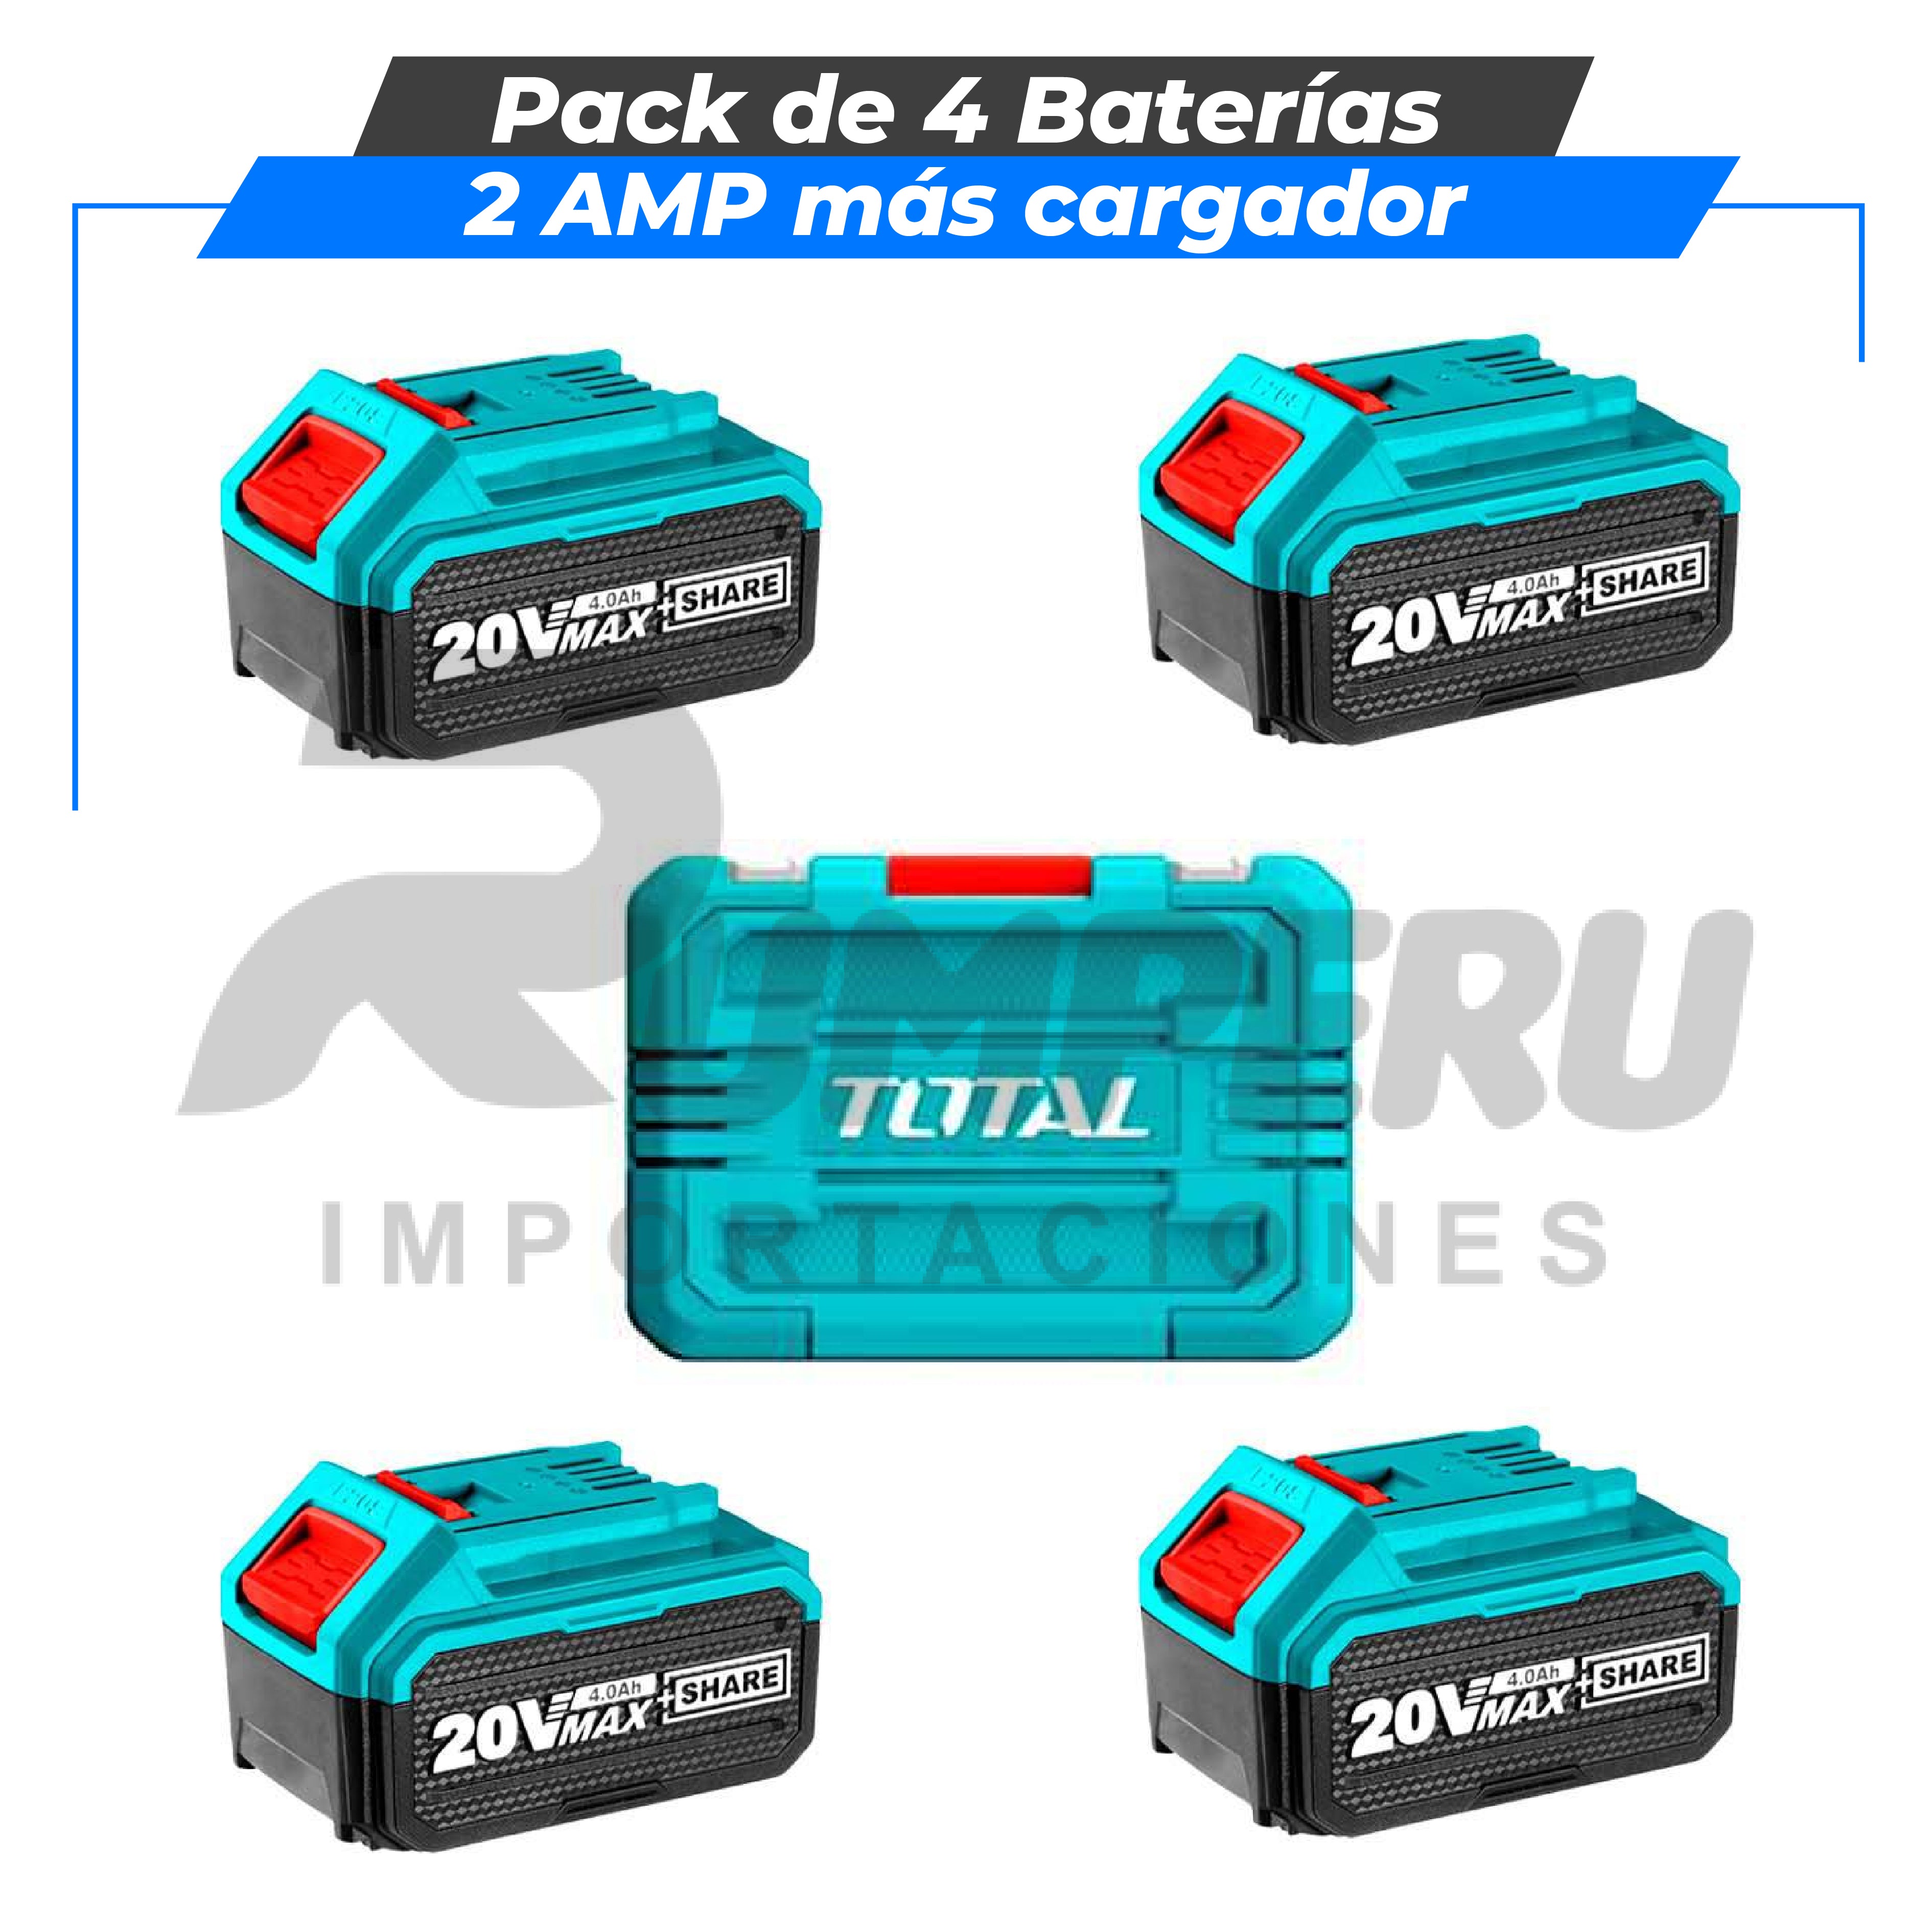 Pack de 4 Baterías 4Amp más cargador